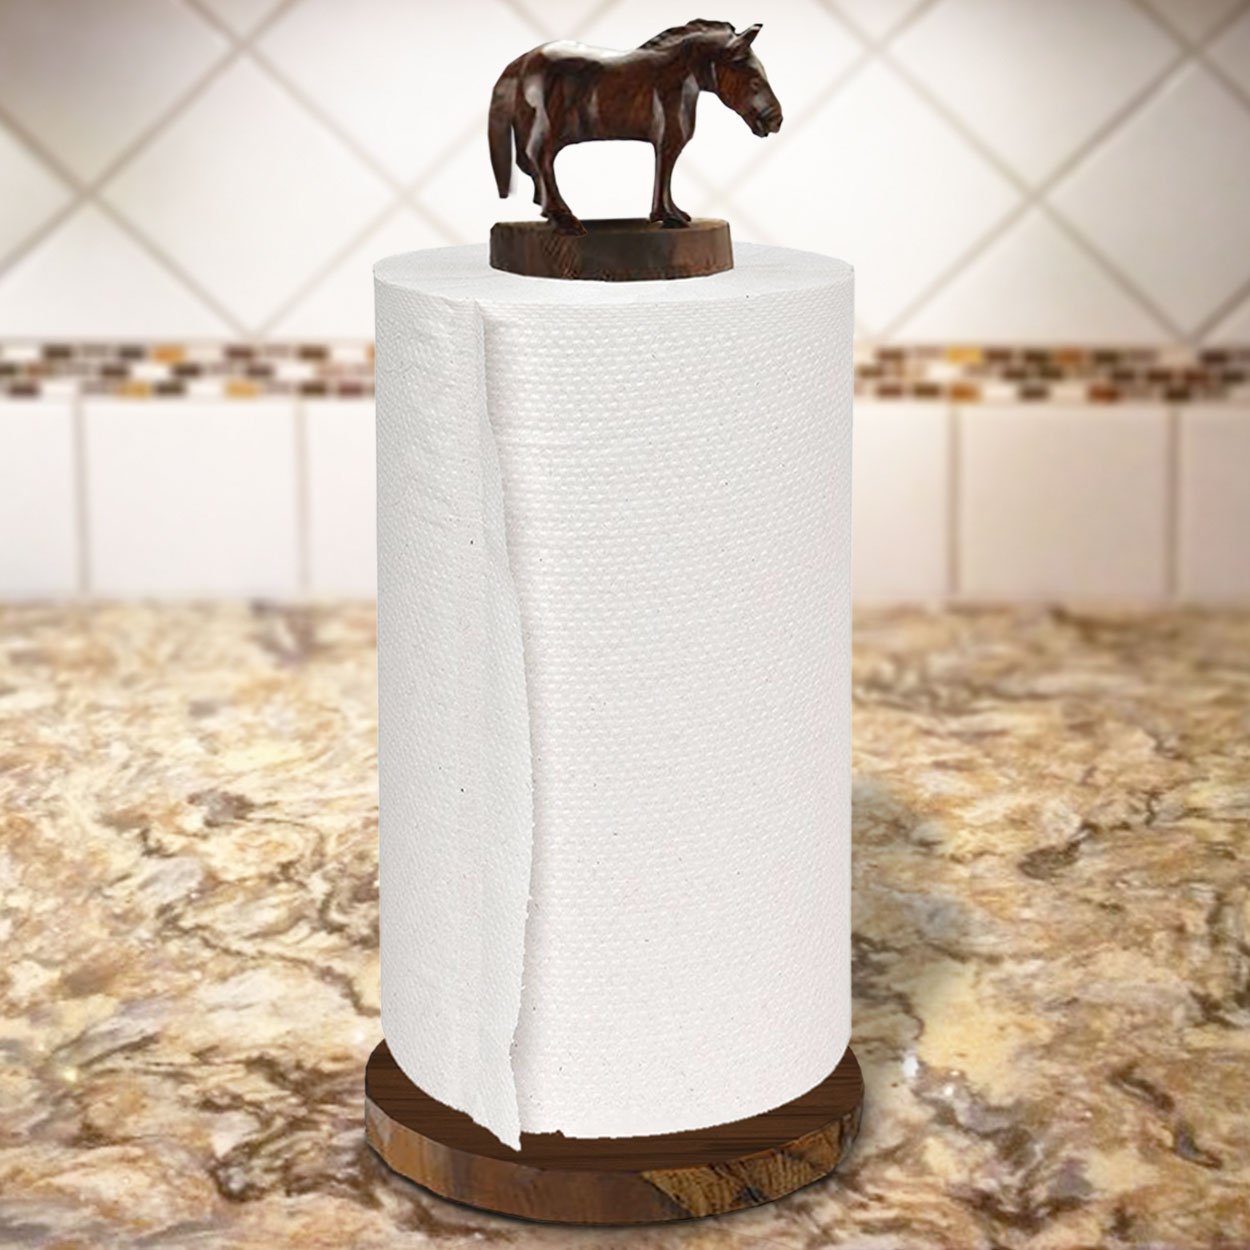 172059 - Horse Ironwood Paper Towel Holder